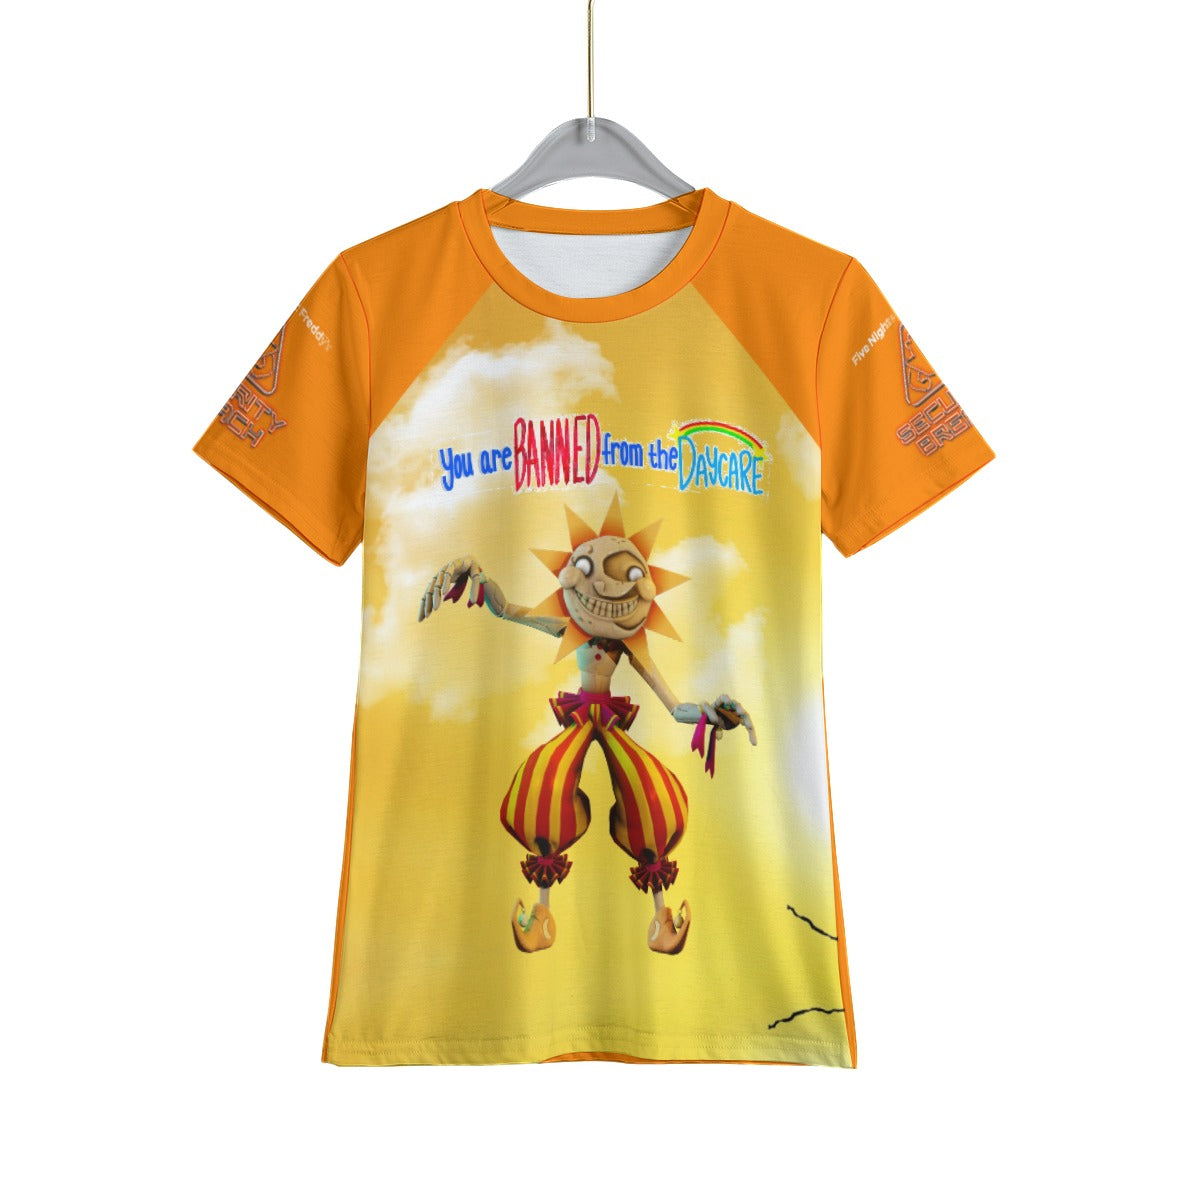 Kids Rainbow Friends Orange Shirt – firebeastus